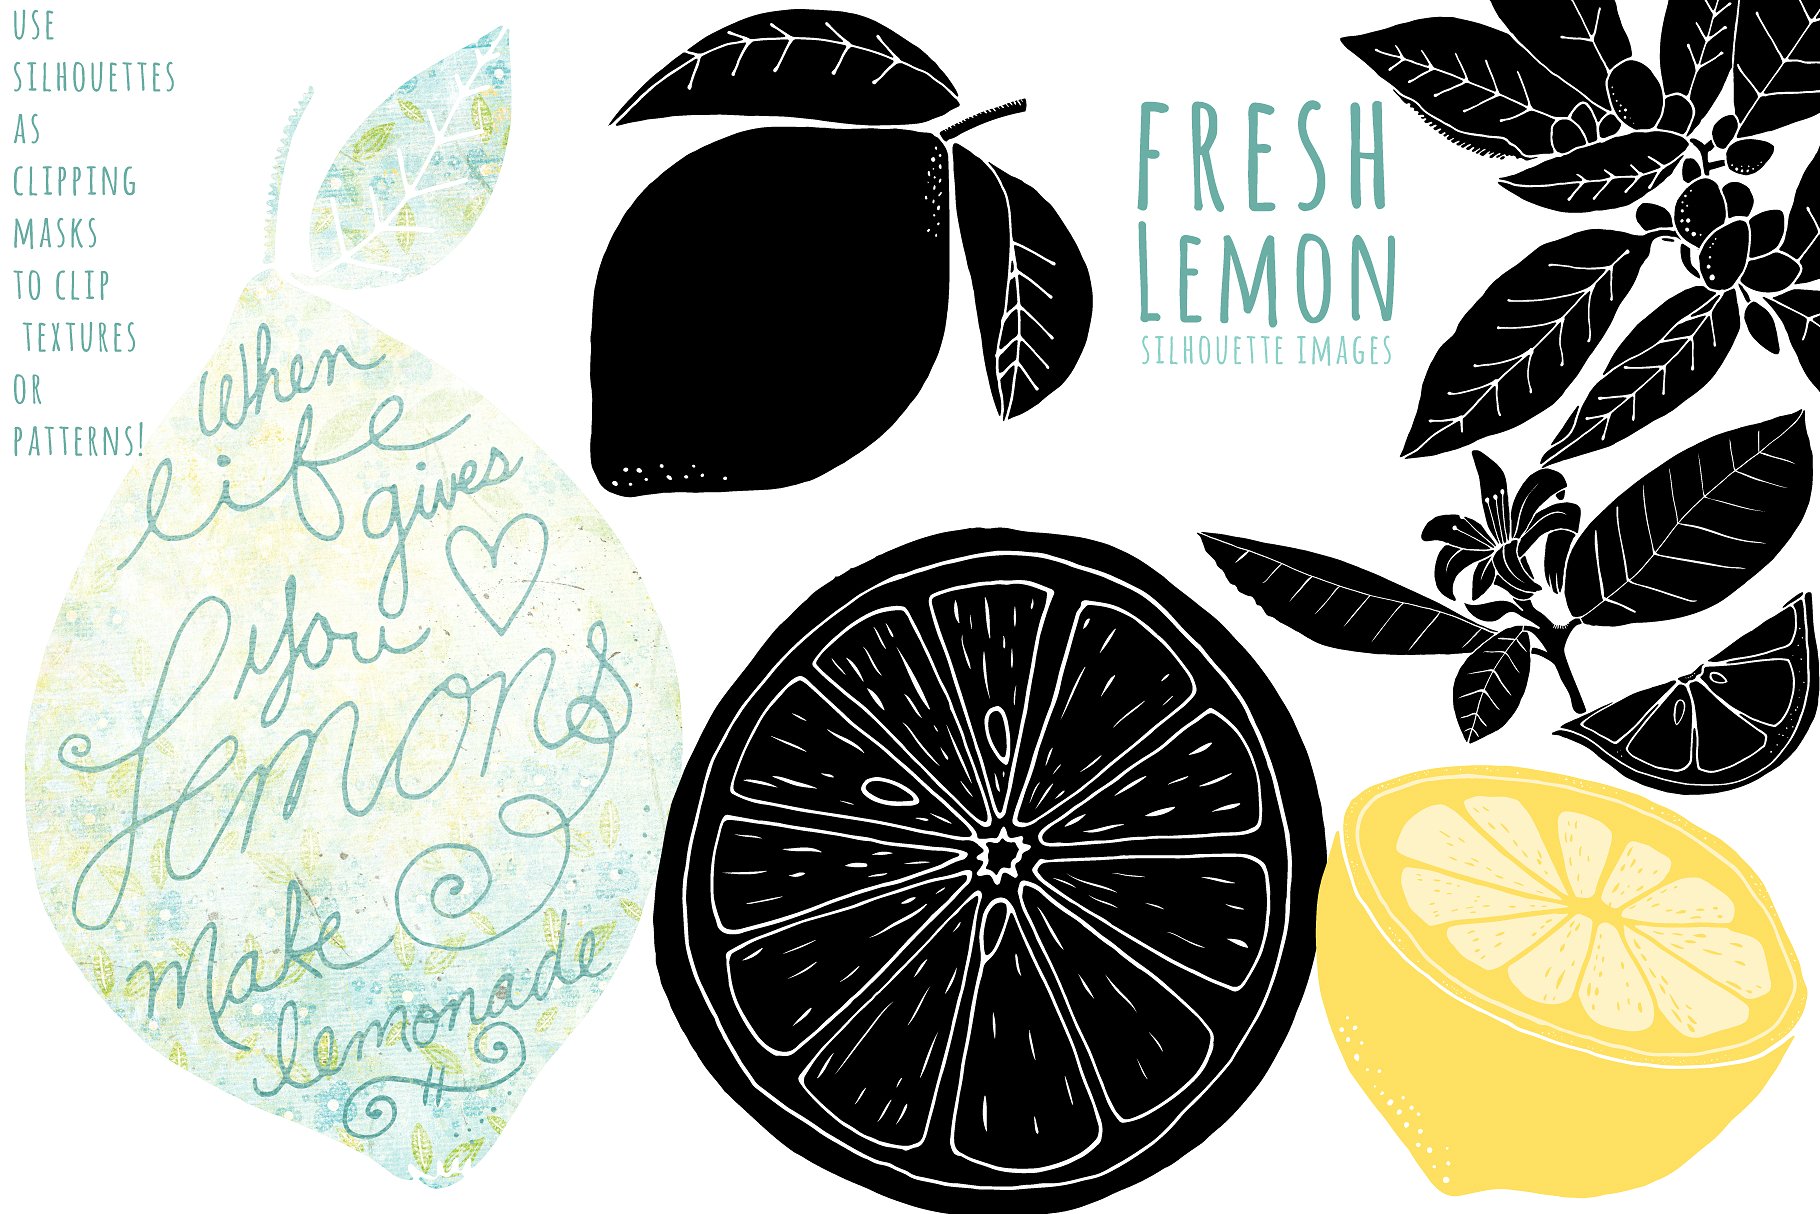 新鲜夏天柠檬插图合集 Lemons, Summer Fruit Illustrations插图(5)